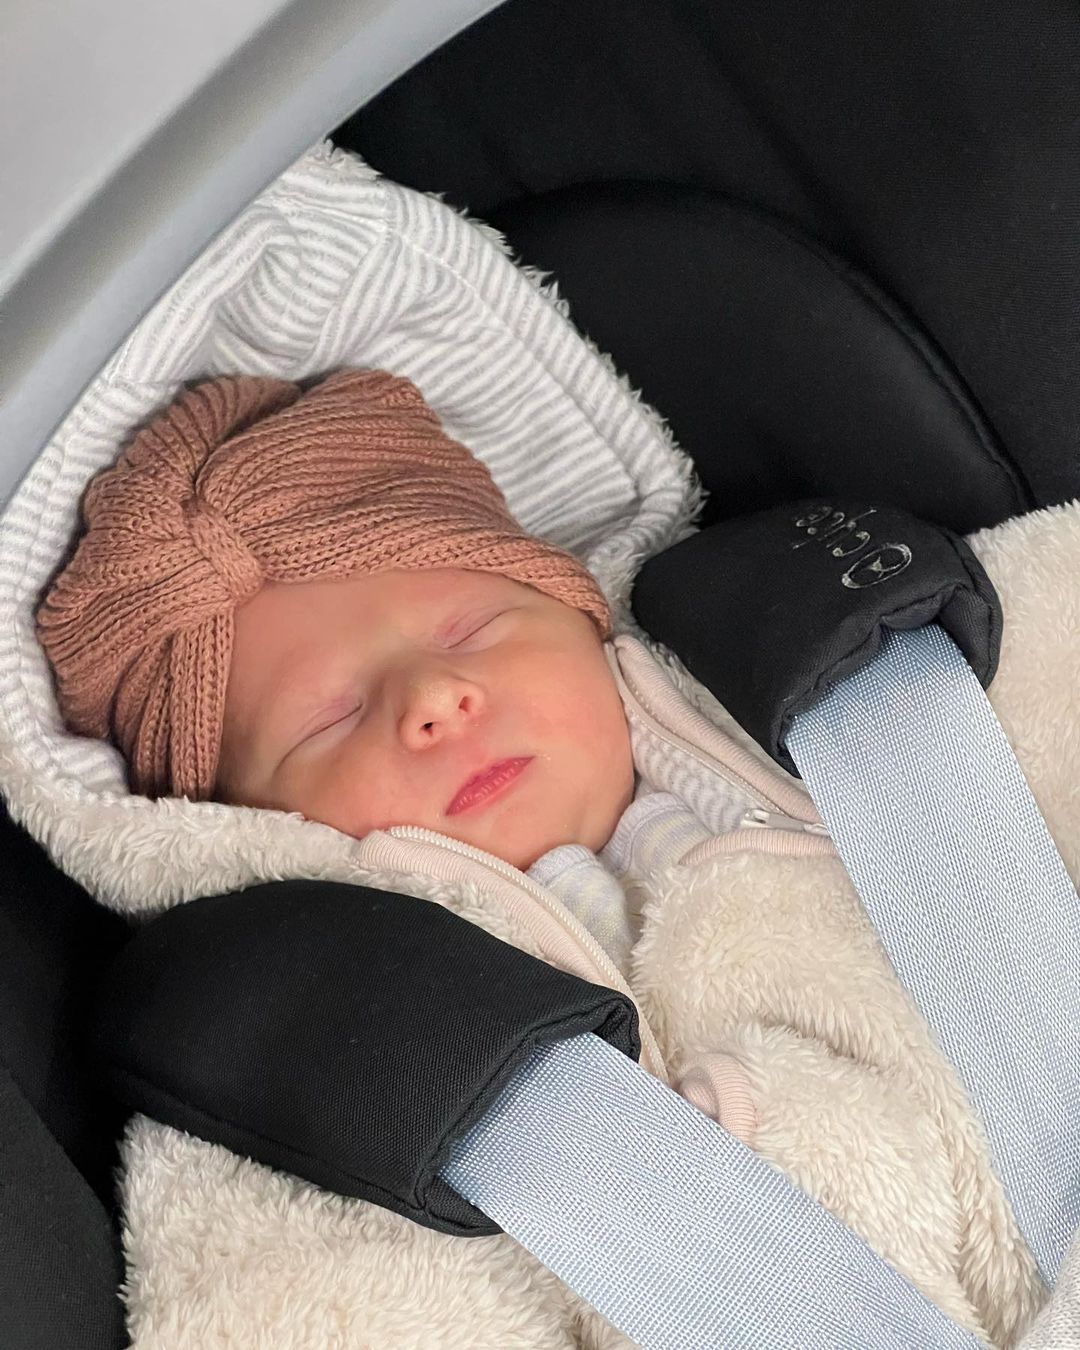 Emmerdale: Michelle Hardwick's Baby Finally Arrives